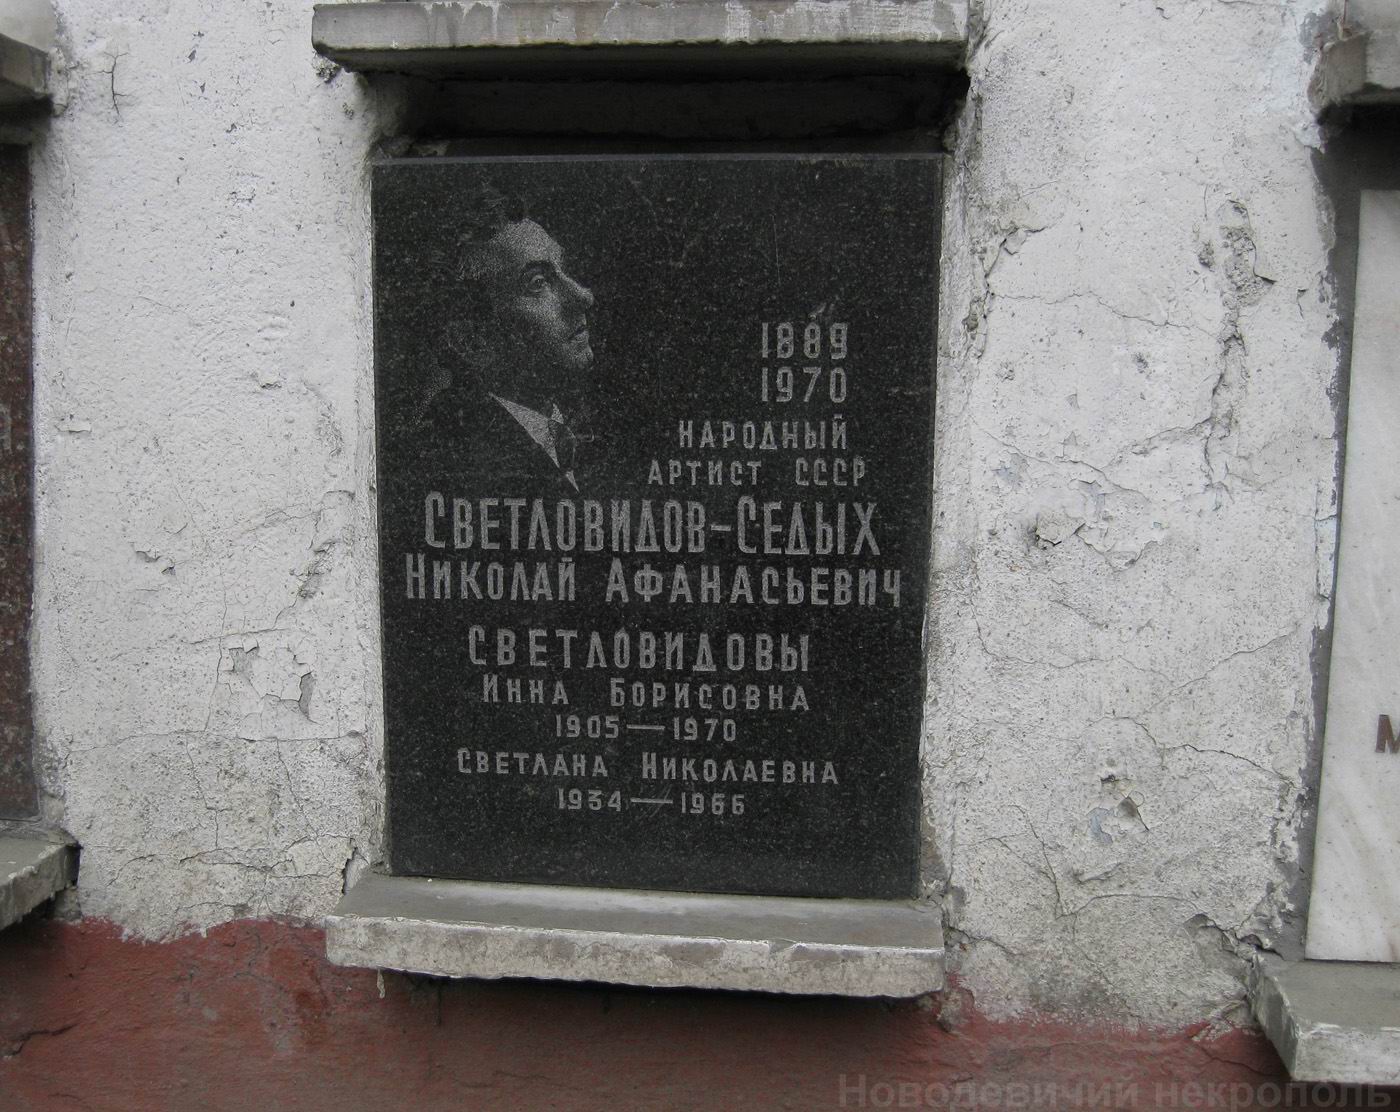 Плита на нише Светловидова-Седых Н.А. (1889–1970), на Новодевичьем кладбище (колумбарий [38]–3–4).